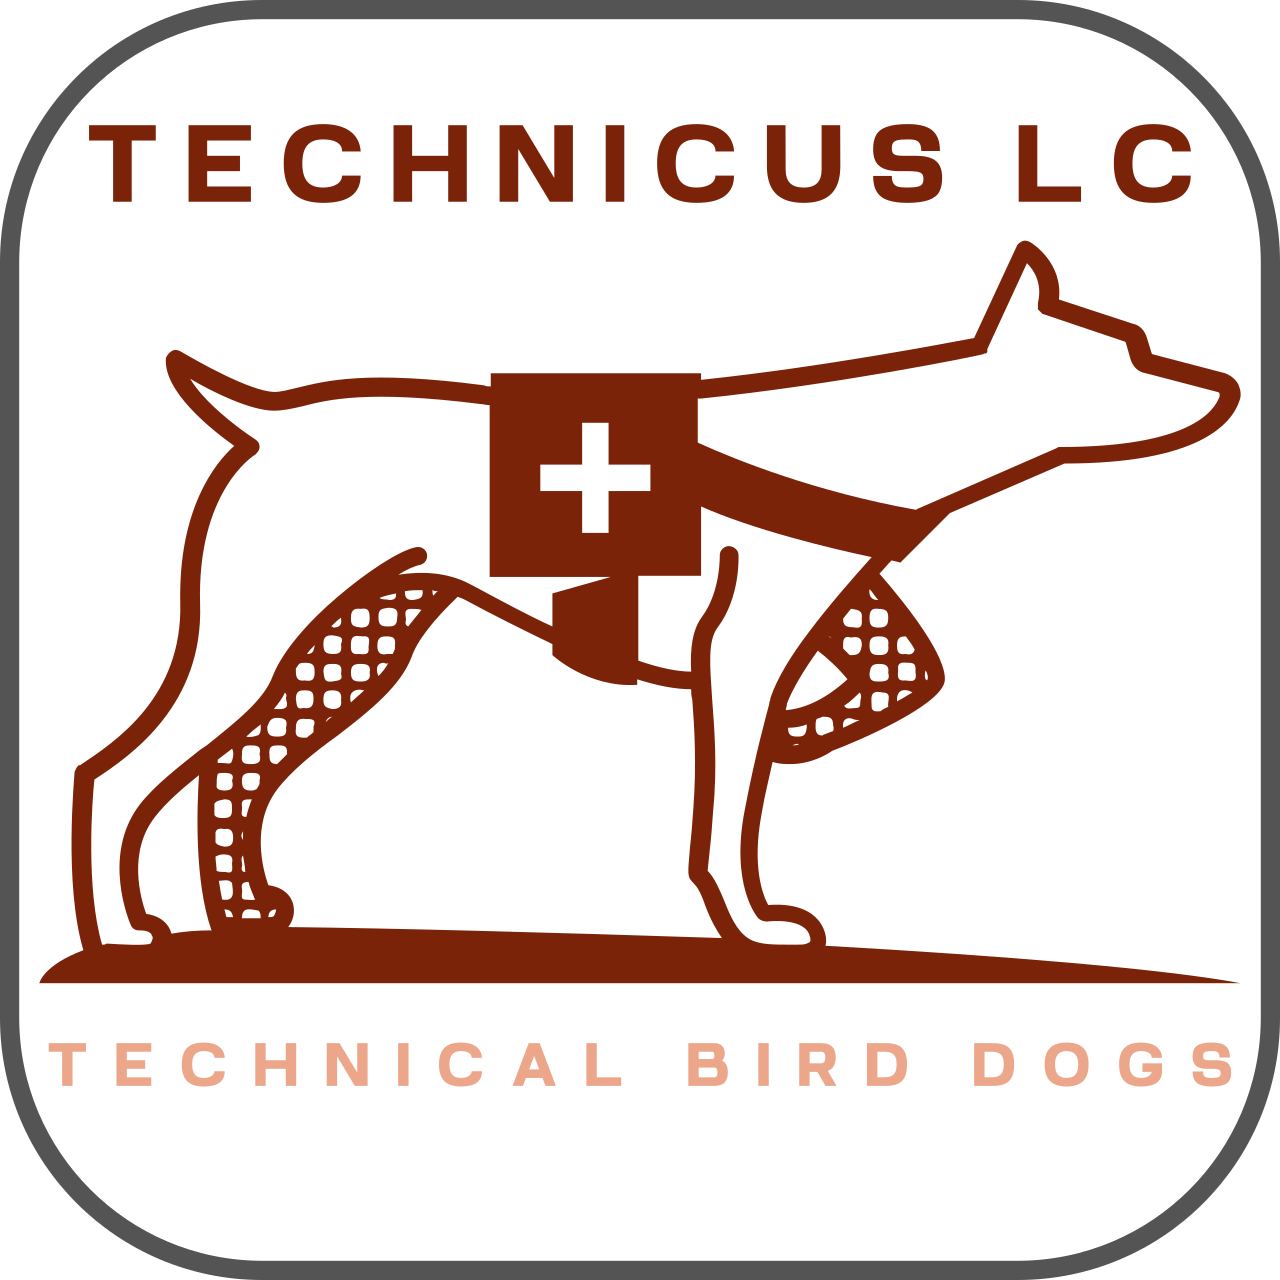 Technicus LC's logo